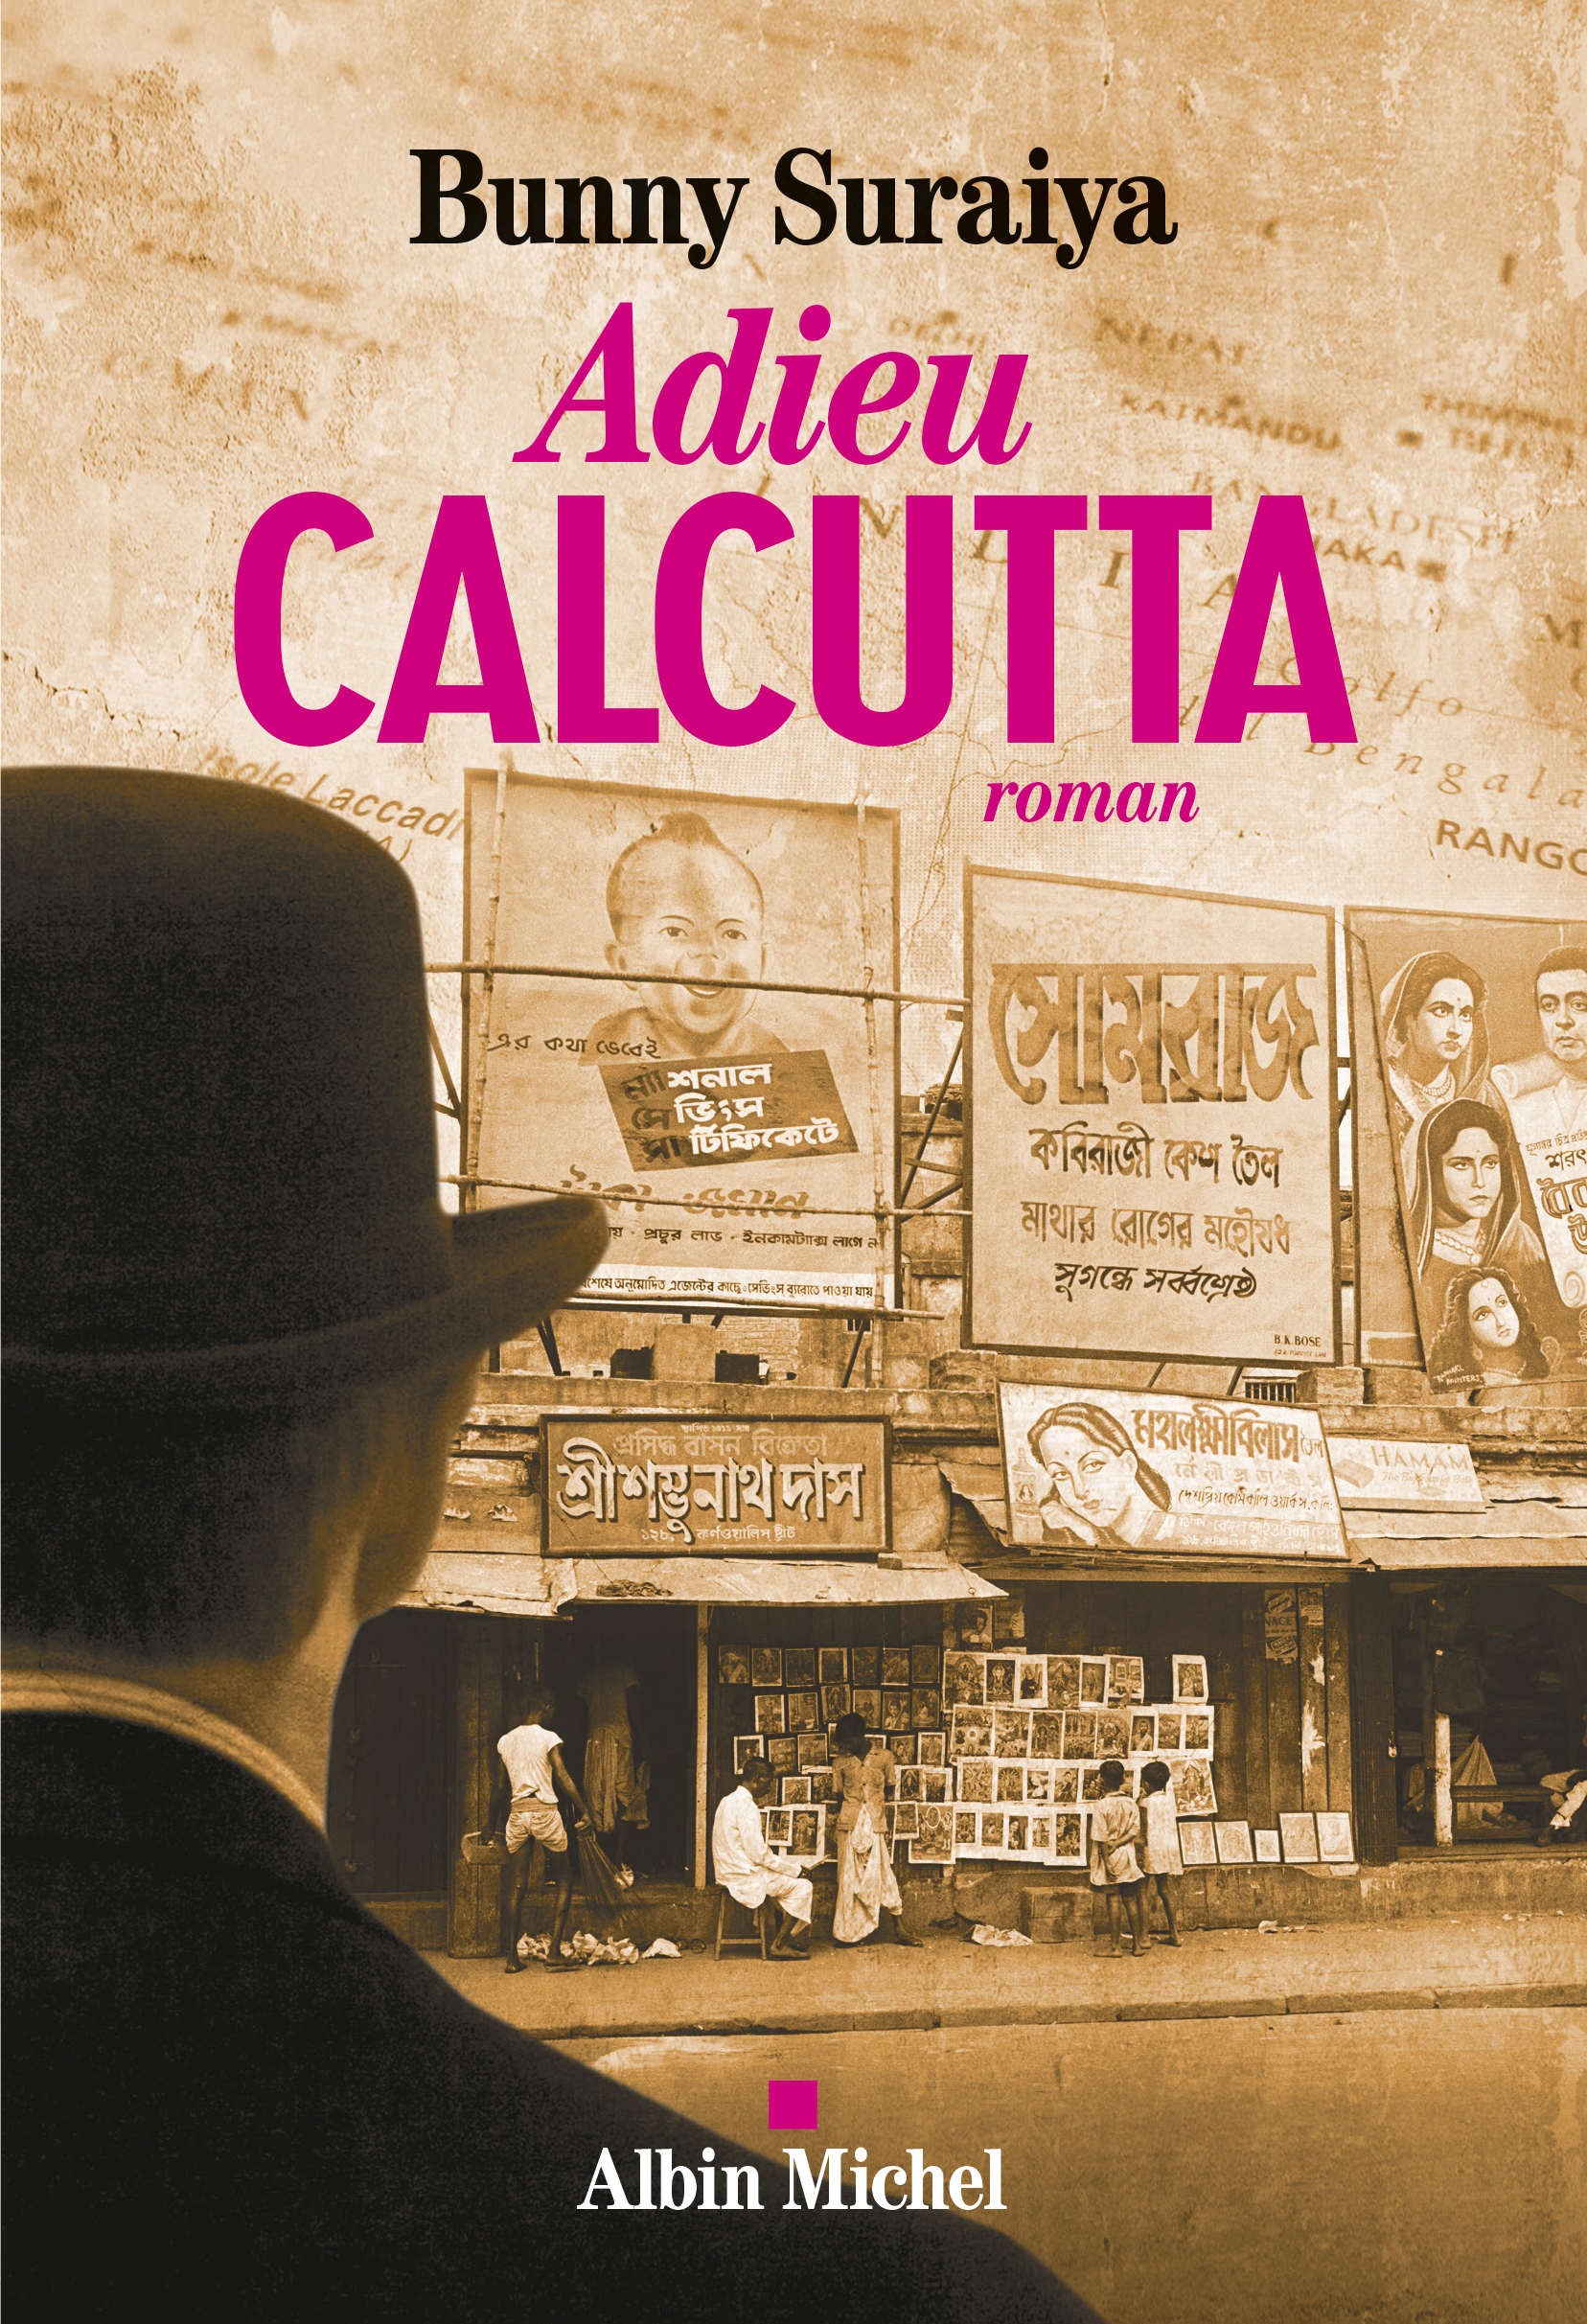 Couverture du livre Adieu Calcutta